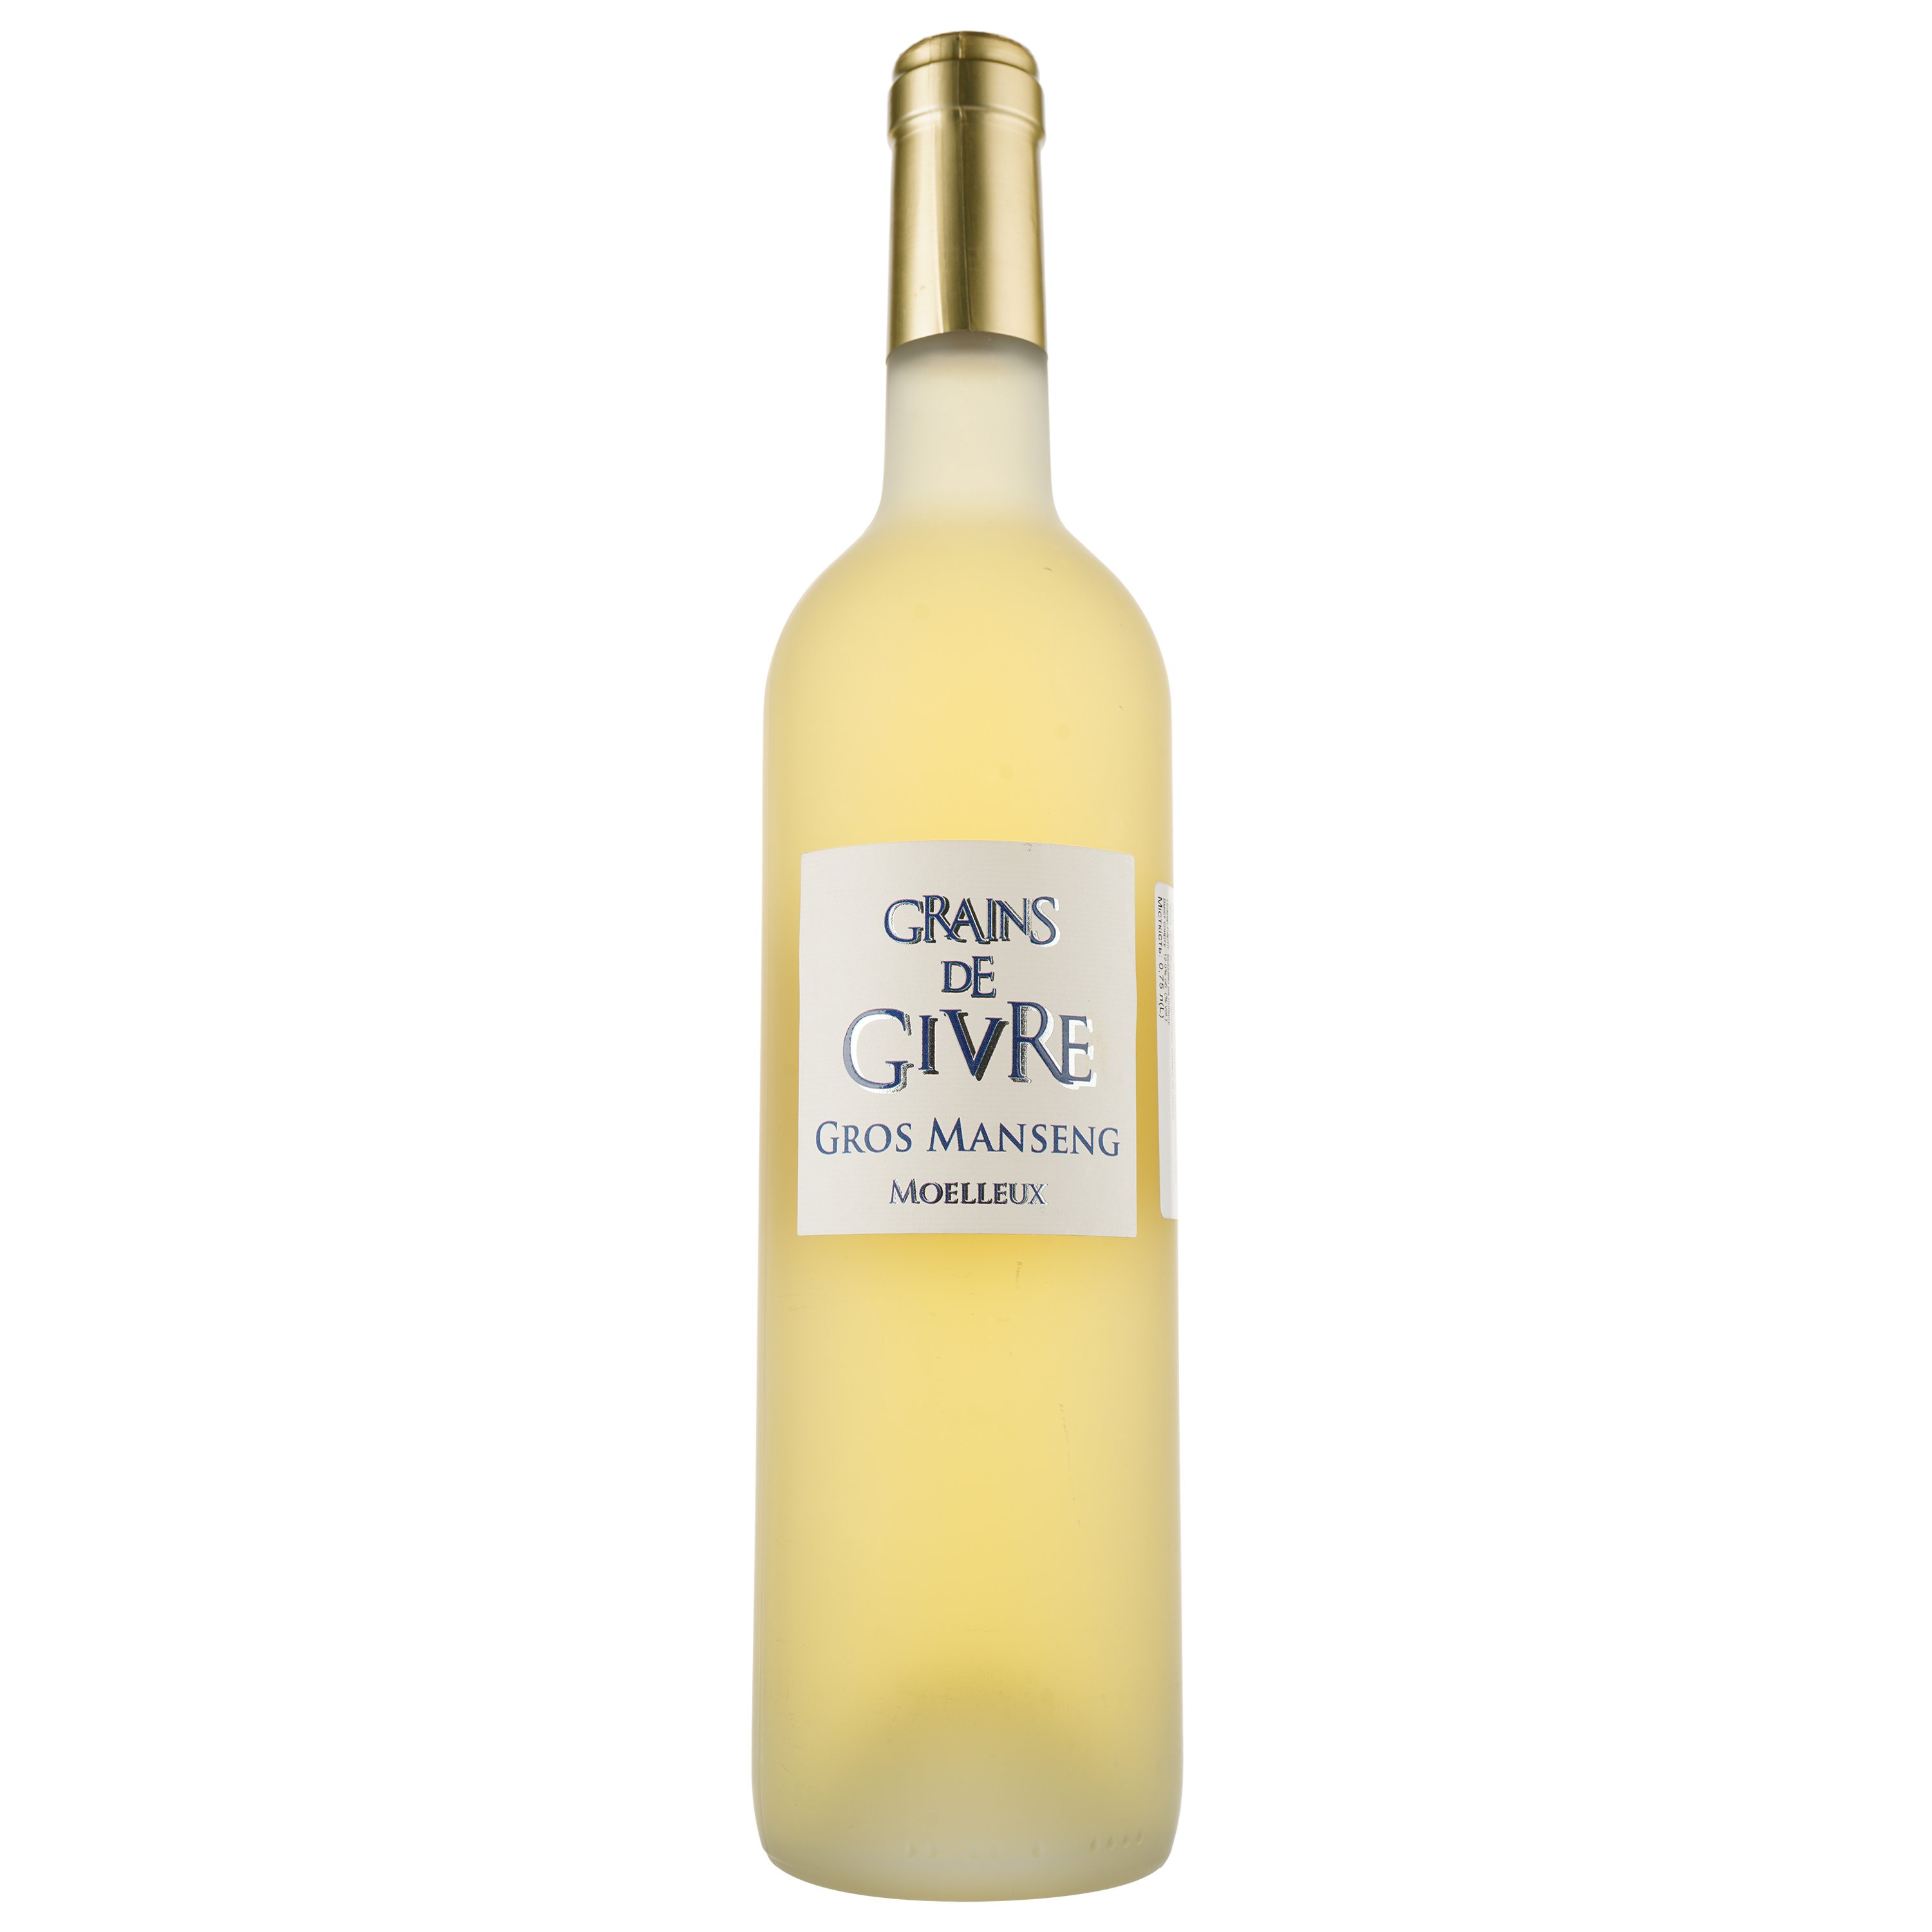 Вино Grains de Givre Gros Manseng 2022 IGP Cotes de Gascogne, белое, полусладкое, 0,75 л - фото 1